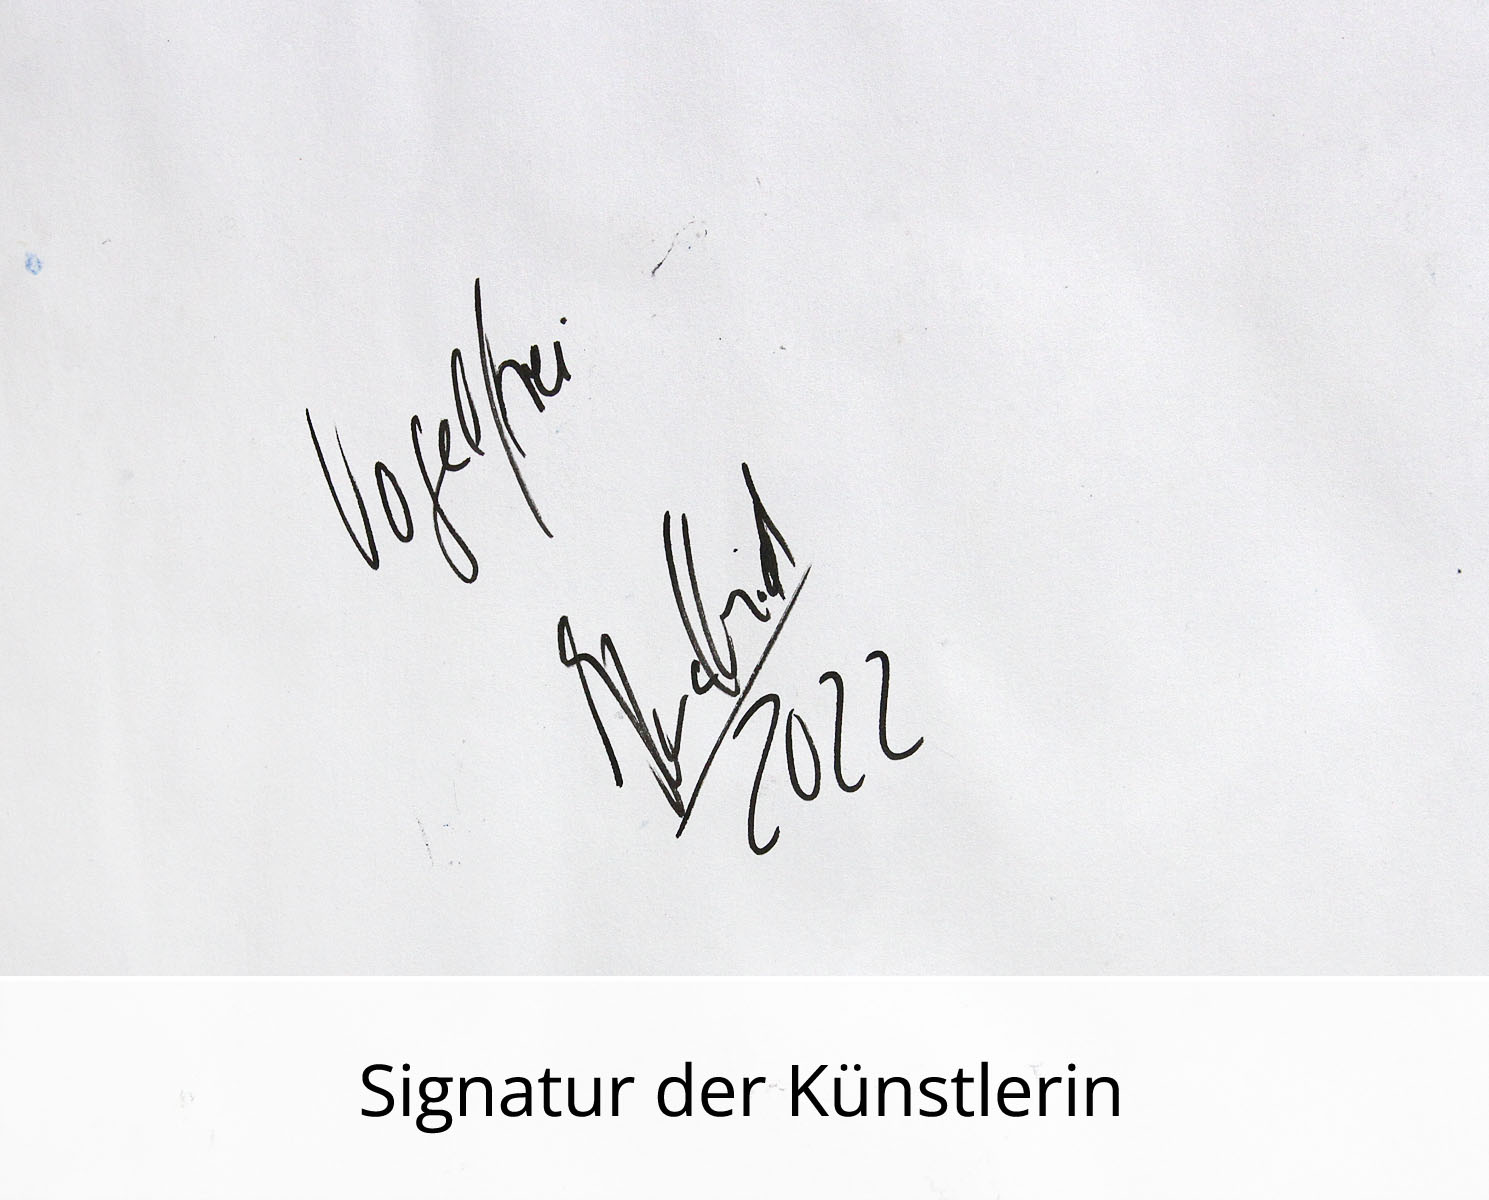 I. Schmidt: "Vogelfrei", zeitgenössische Grafik/Malerei, Original/Unikat